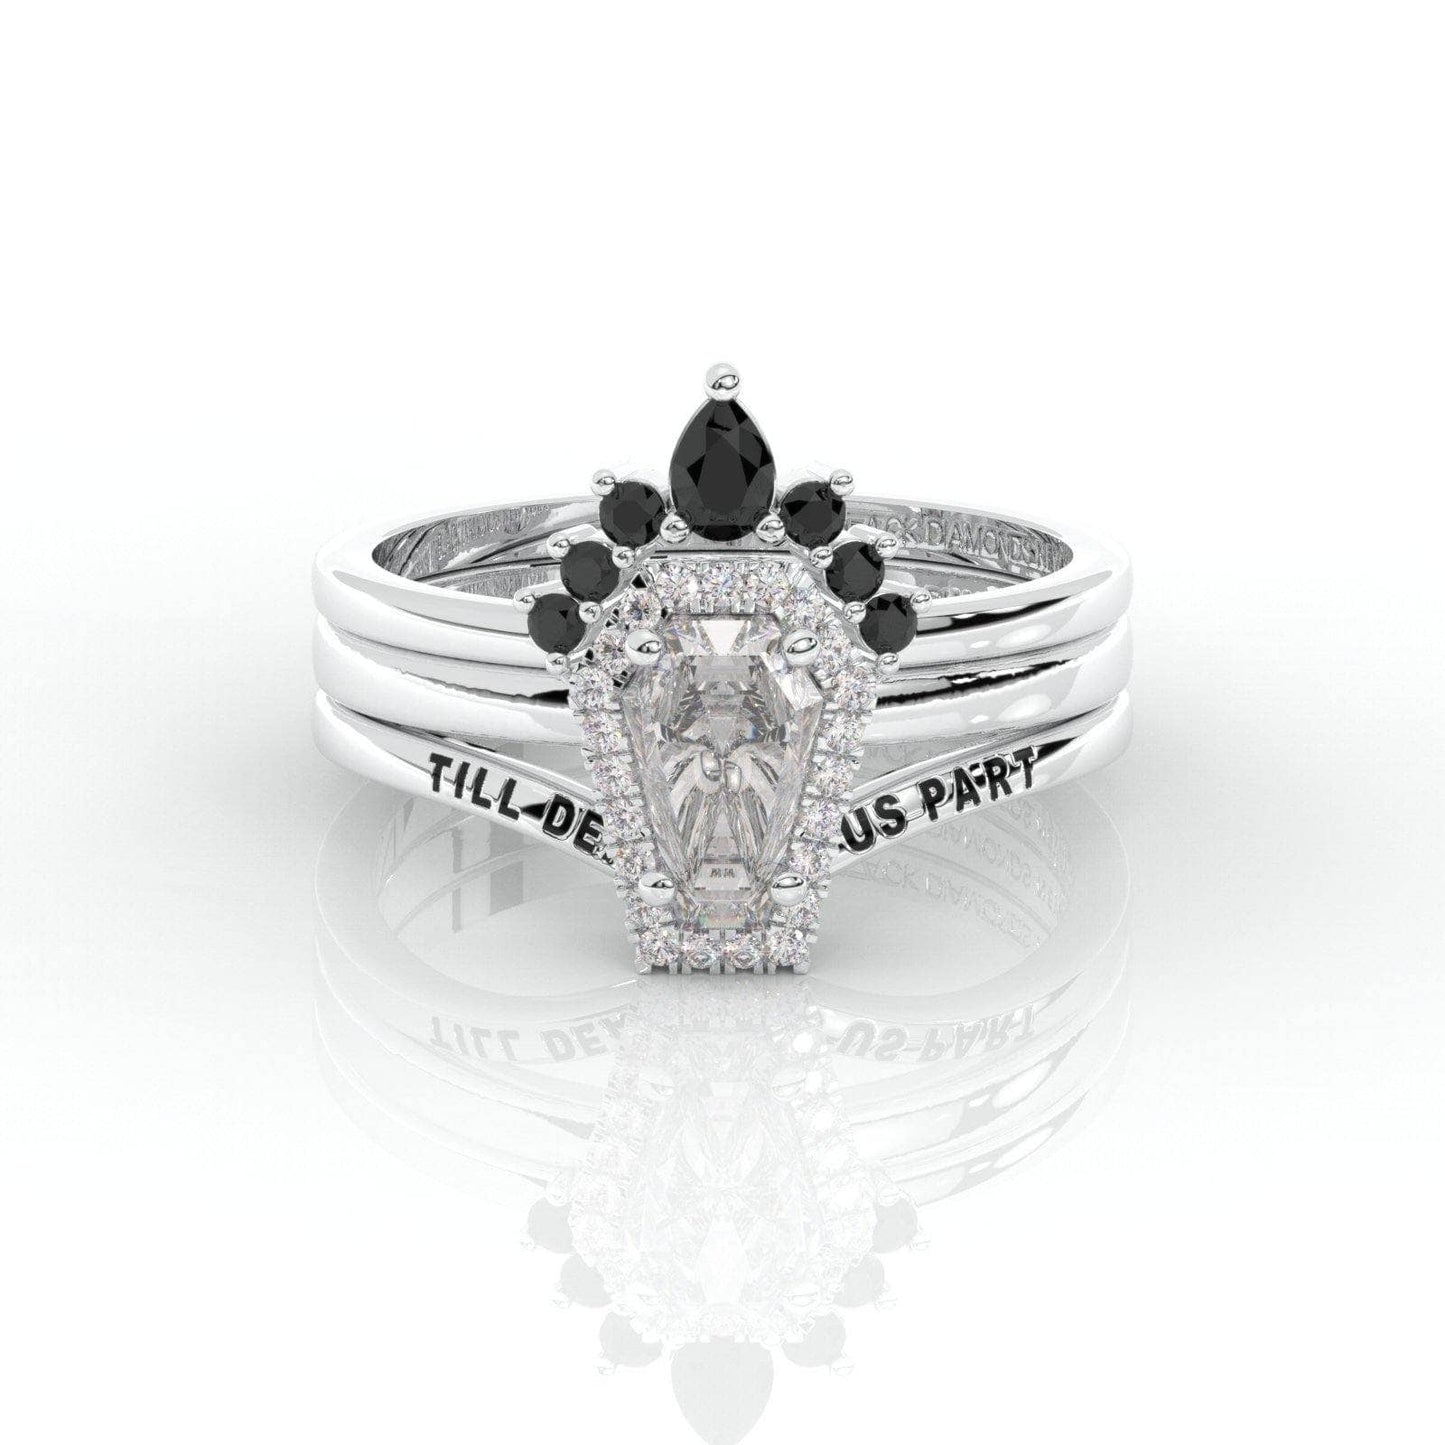 Till Death Do Us Part Rings- Rare Coffin Cut Diamond 14k White Gold Ring Set-Black Diamonds New York